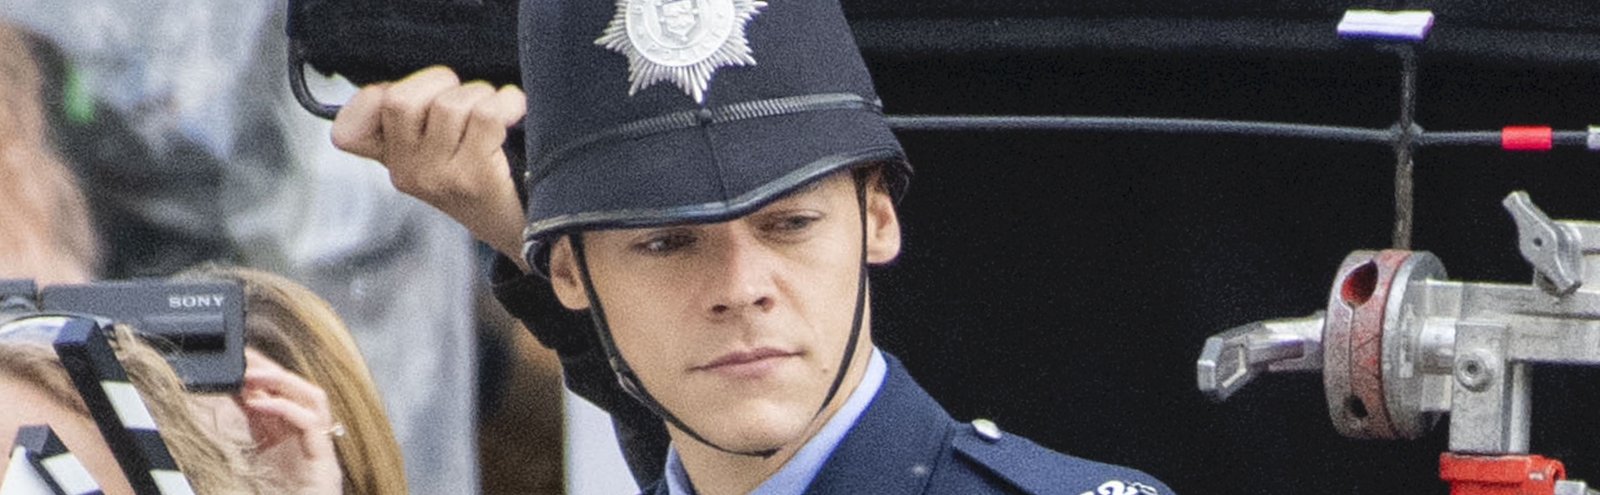 harry-styles-policeman.jpg